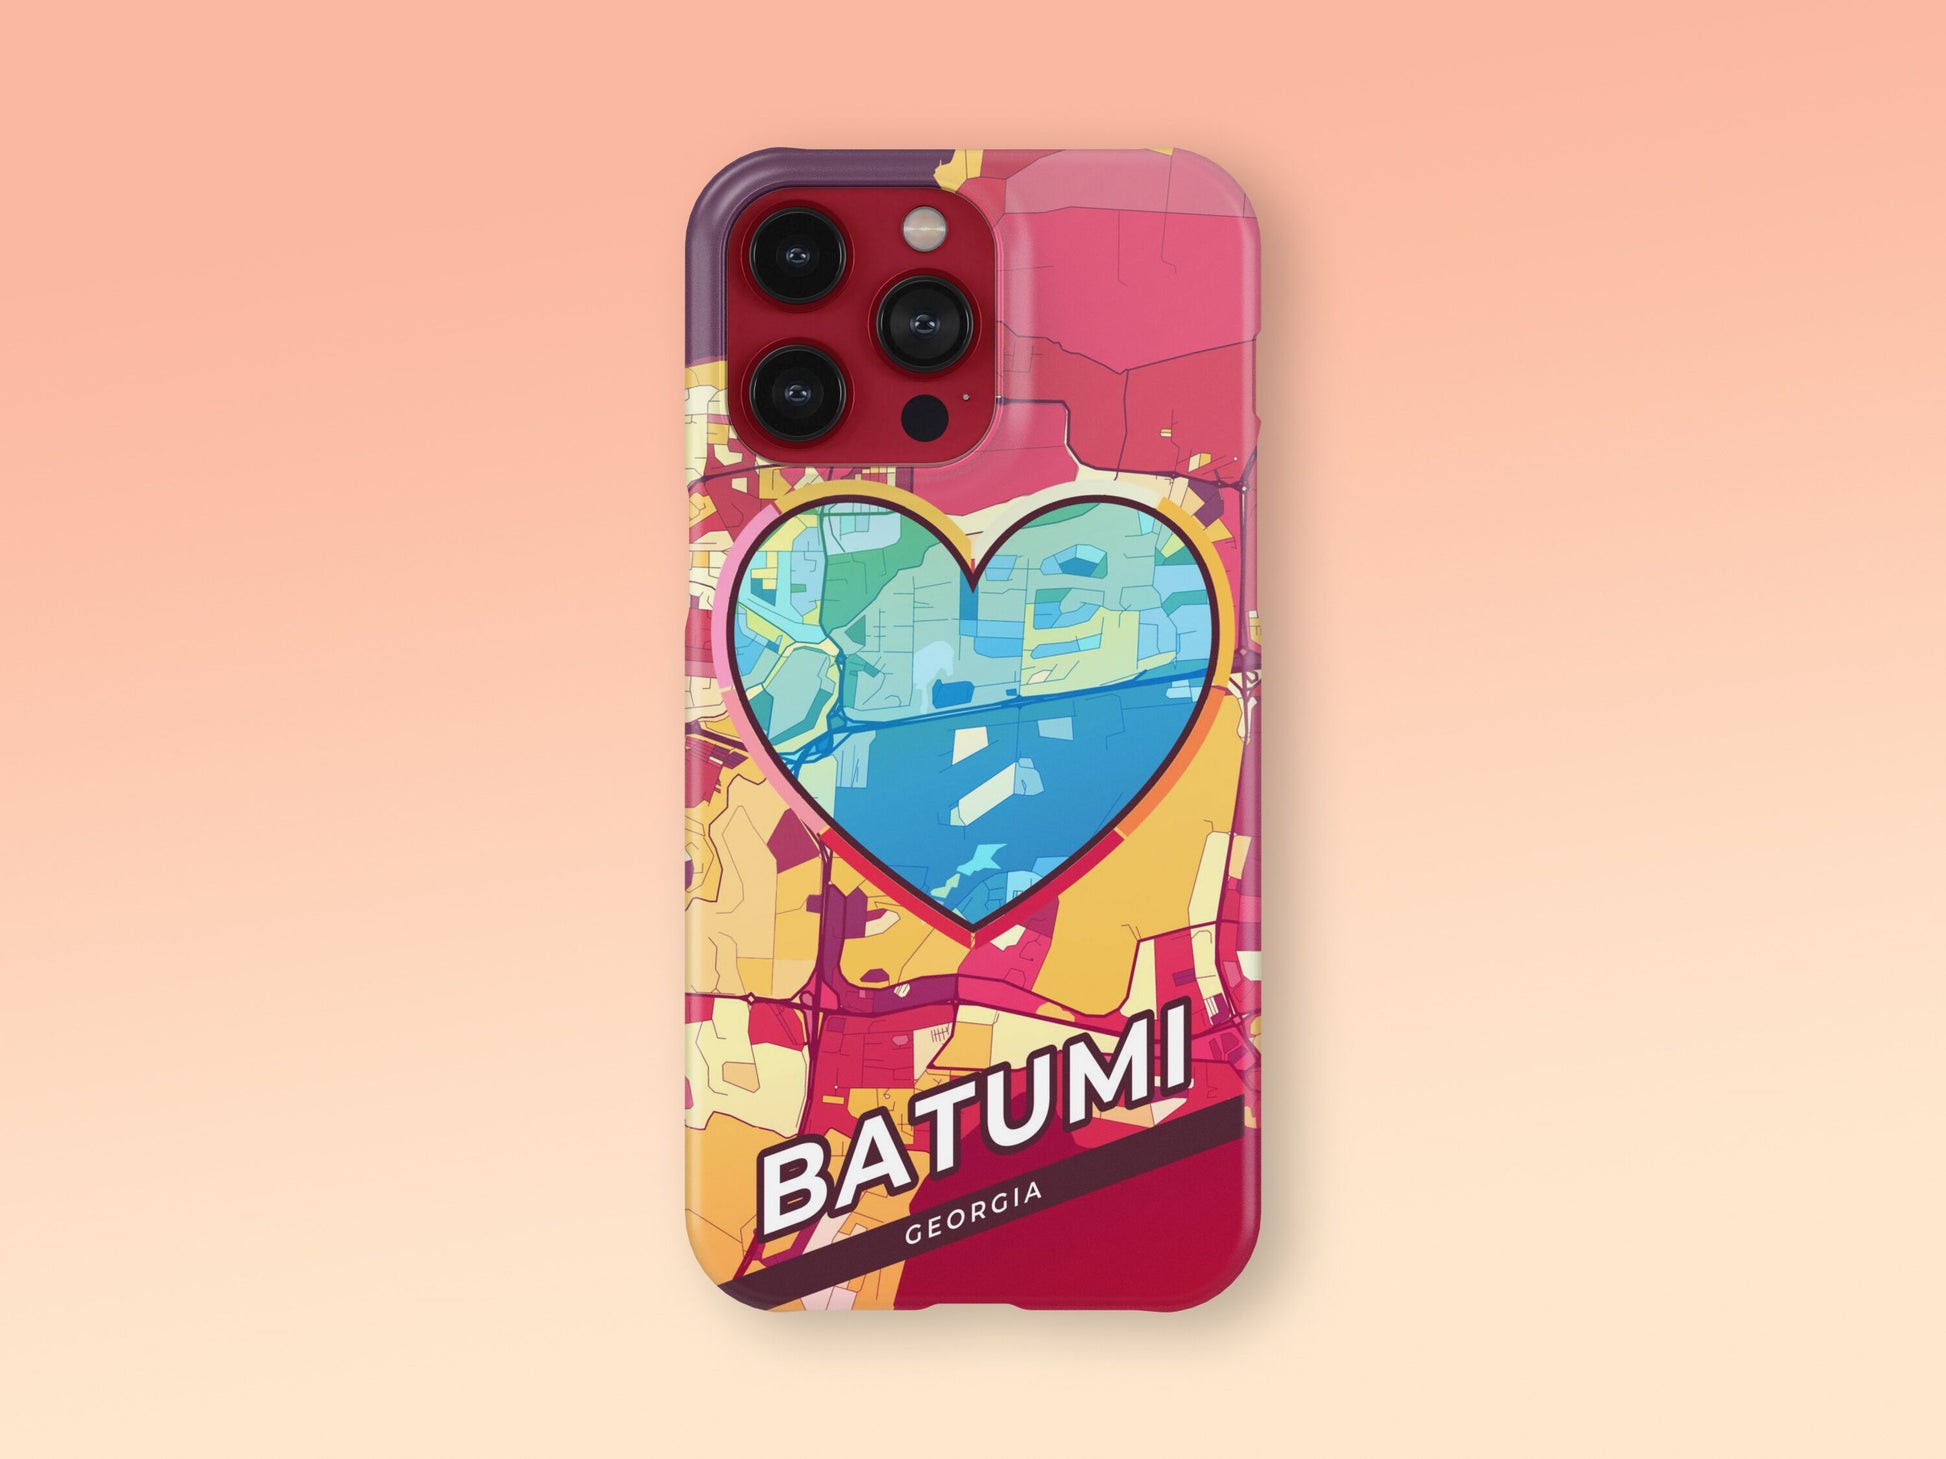 Batumi Georgia slim phone case with colorful icon. Birthday, wedding or housewarming gift. Couple match cases. 2